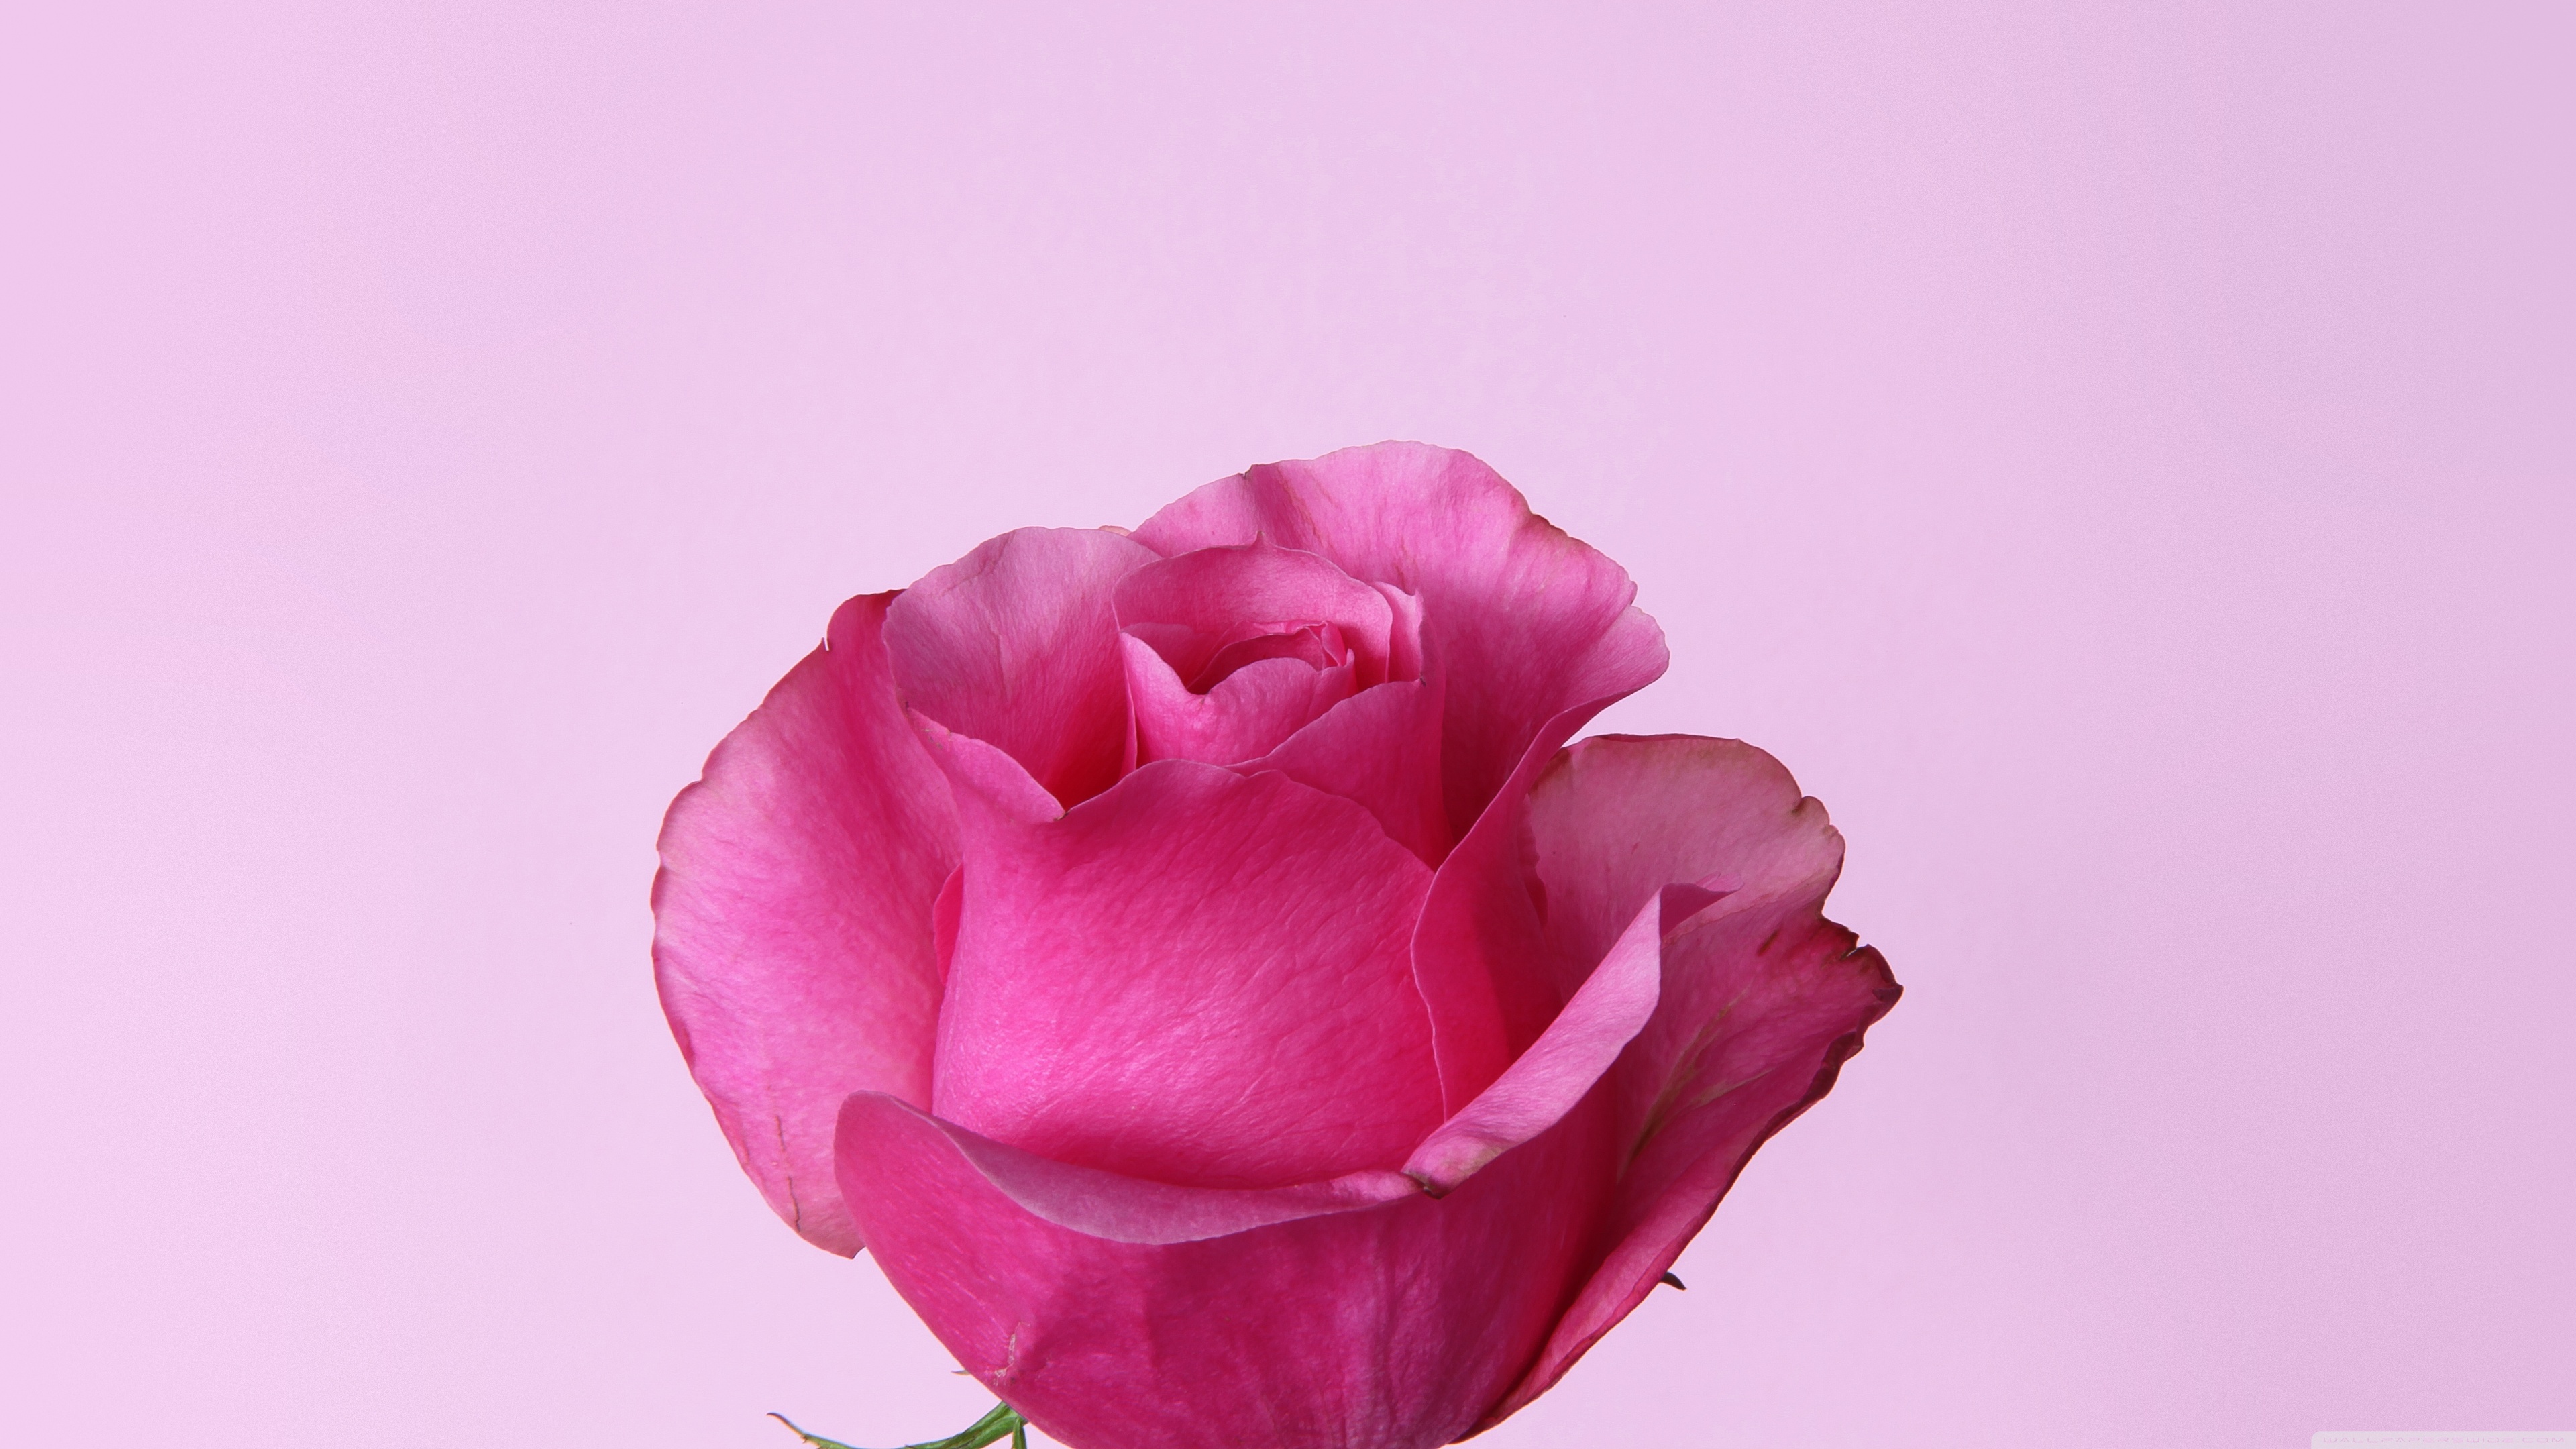 Dark Pink Rose ❤ 4K HD Desktop Wallpaper for 4K Ultra HD TV • Wide ...